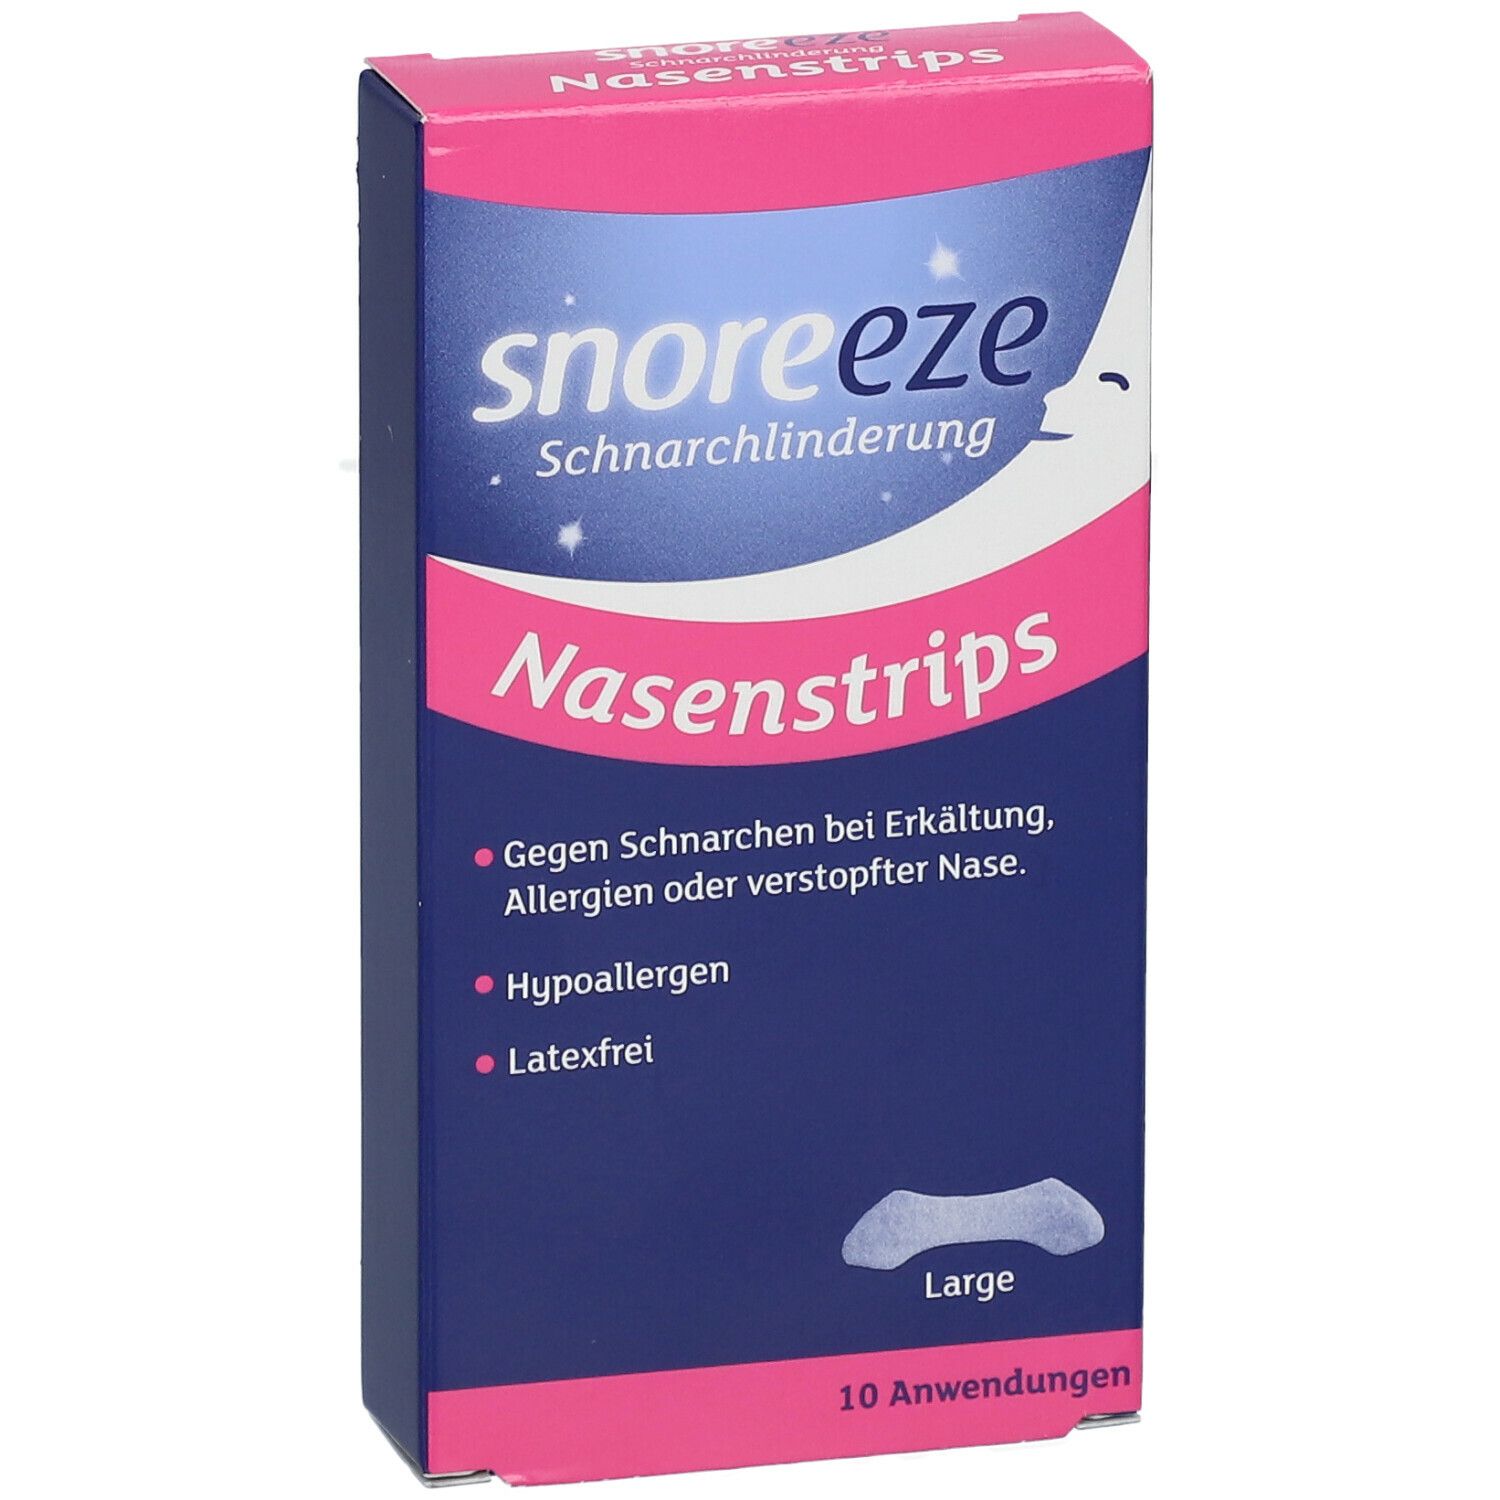 snoreeze Nasenstrips large